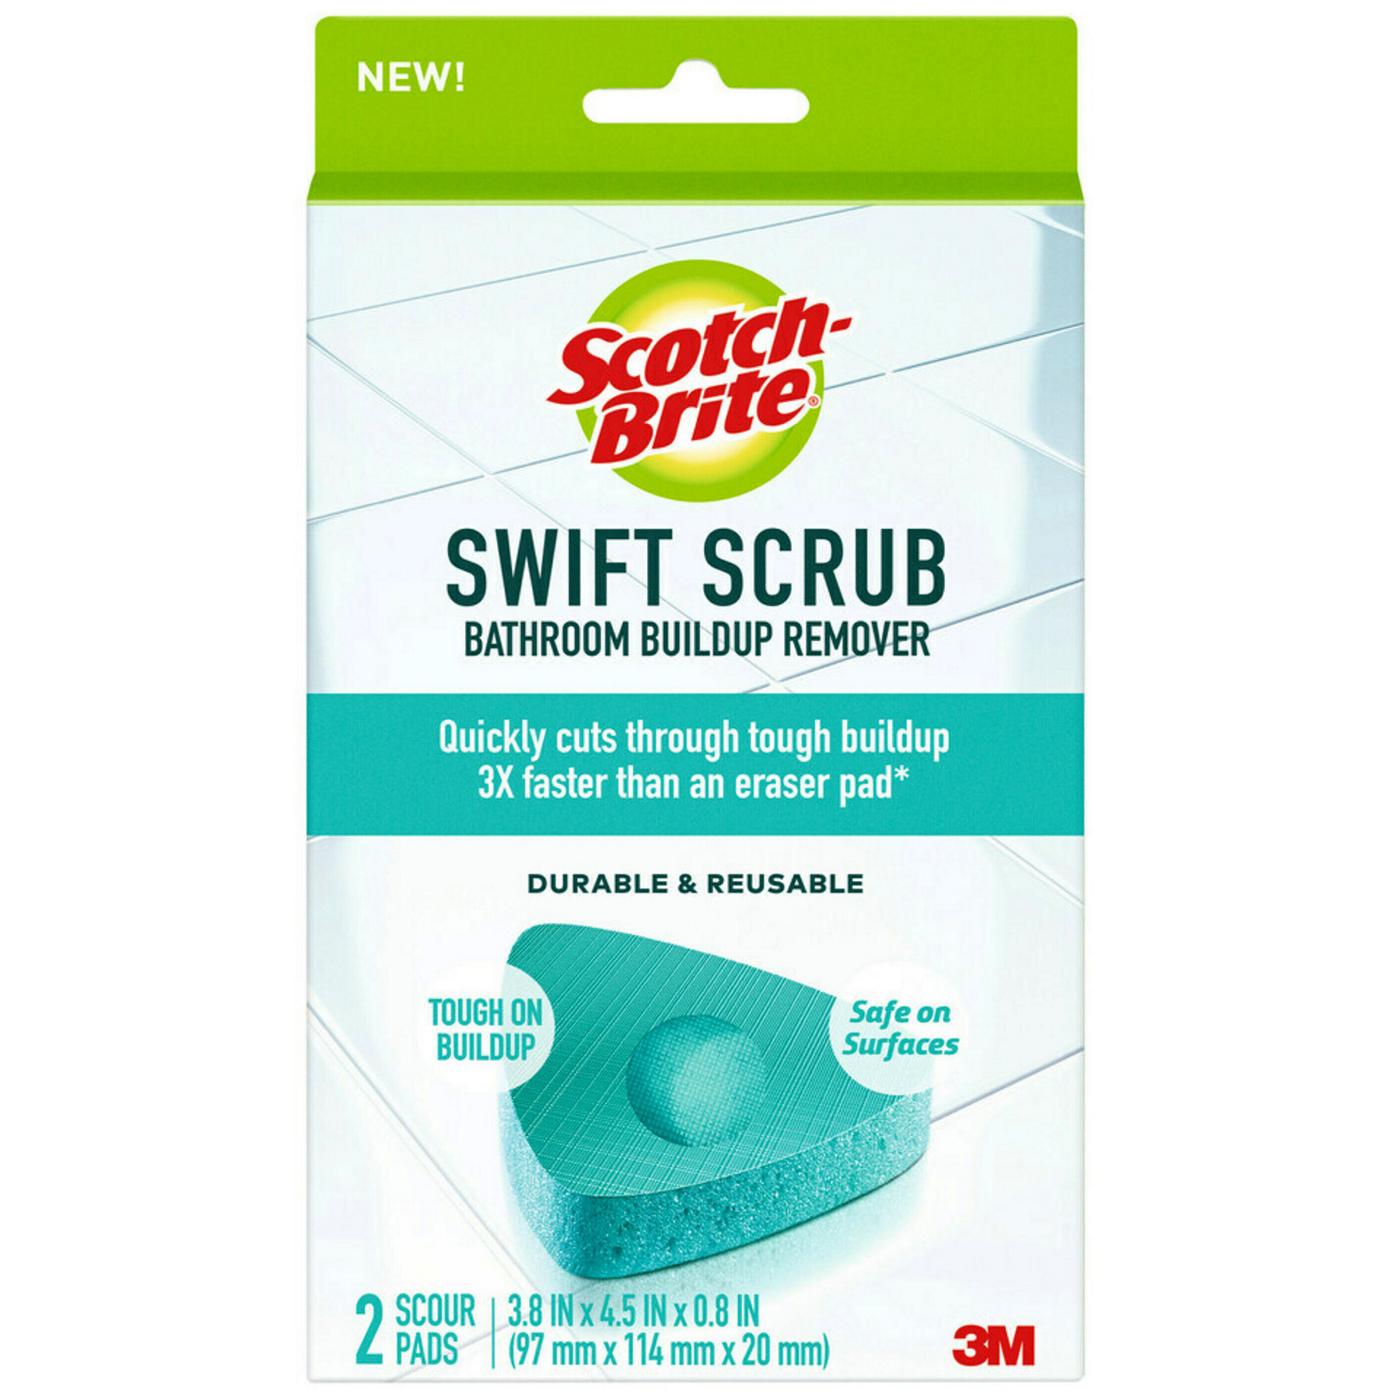 Scotch-Brite Swift Scrub Bathroom Buildup Remover Pads; image 1 of 5